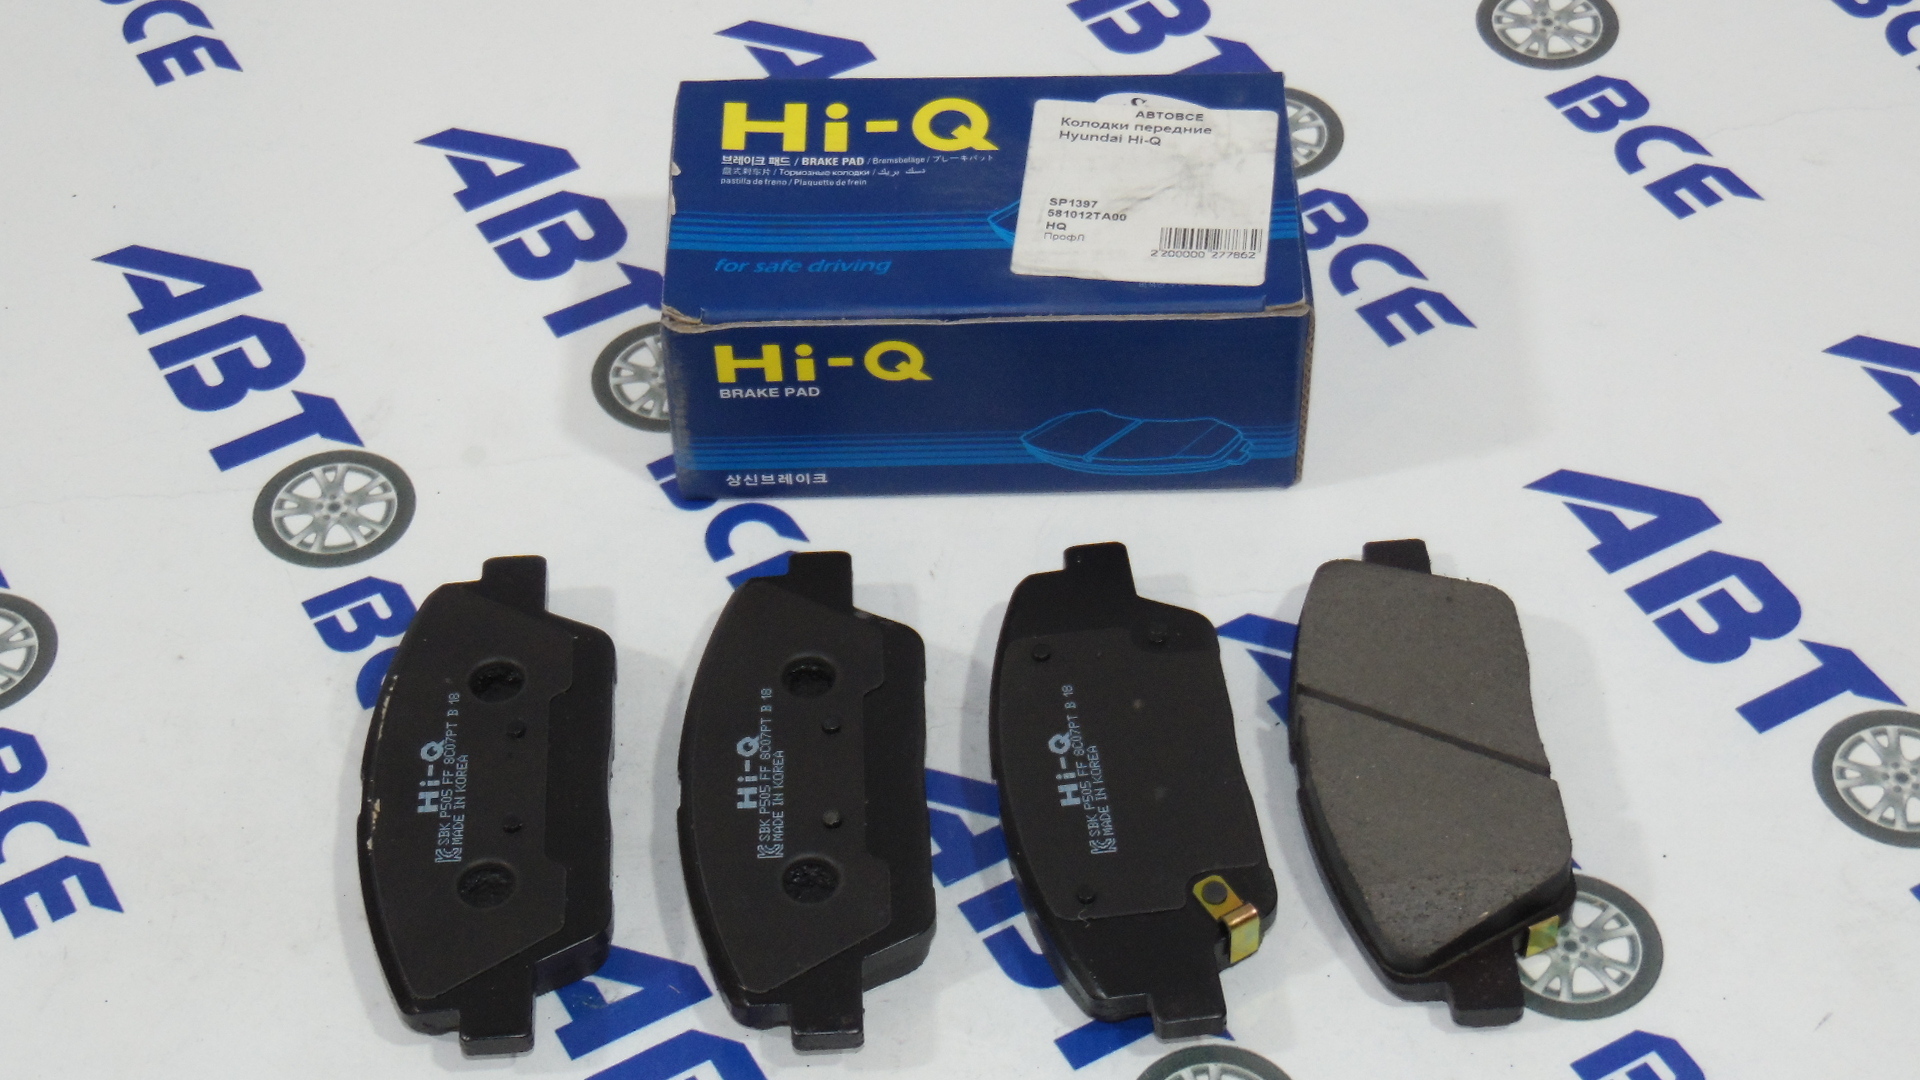 Колодки передние Hyundai Hi-Q